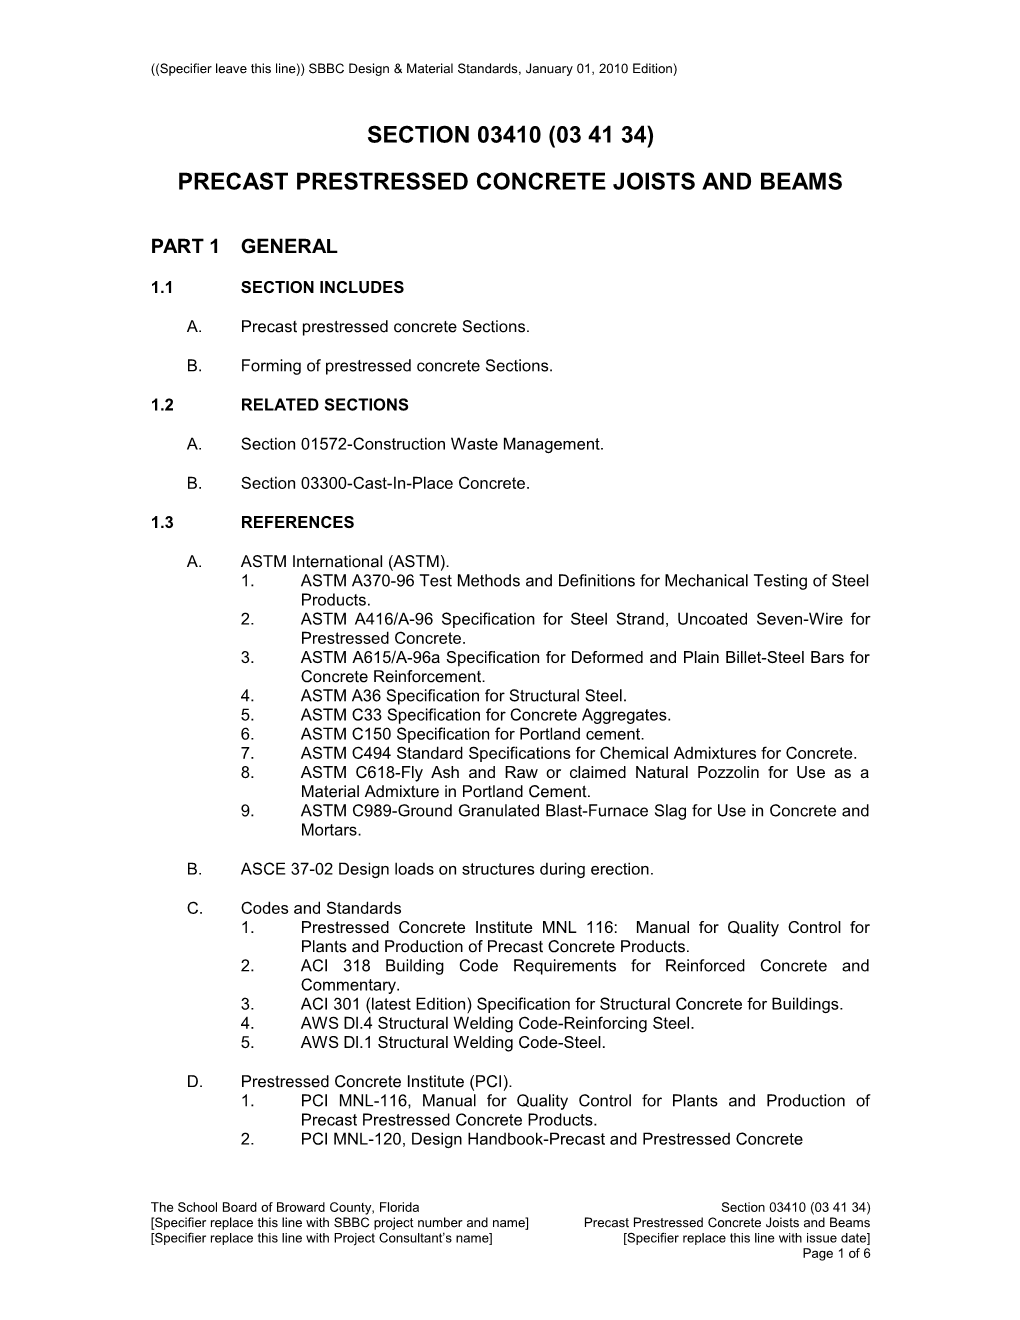 Precast Prestressed Concrete Joists and Beams